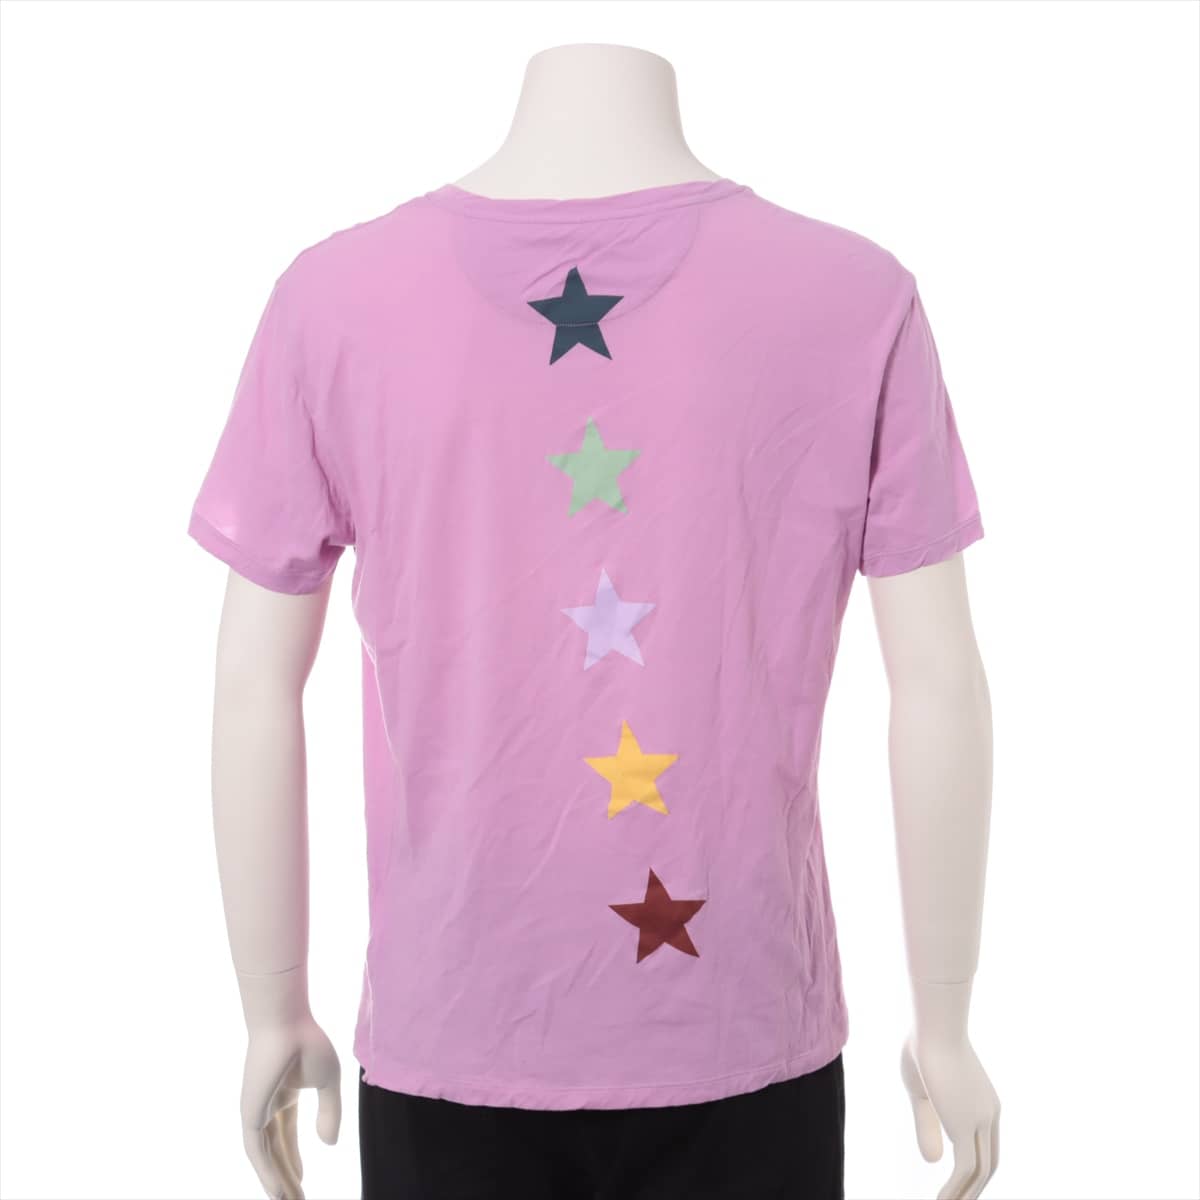 Valentino 17-18AW Cotton T-shirt L Men's Pink Gold   Star & Jamie leads Print